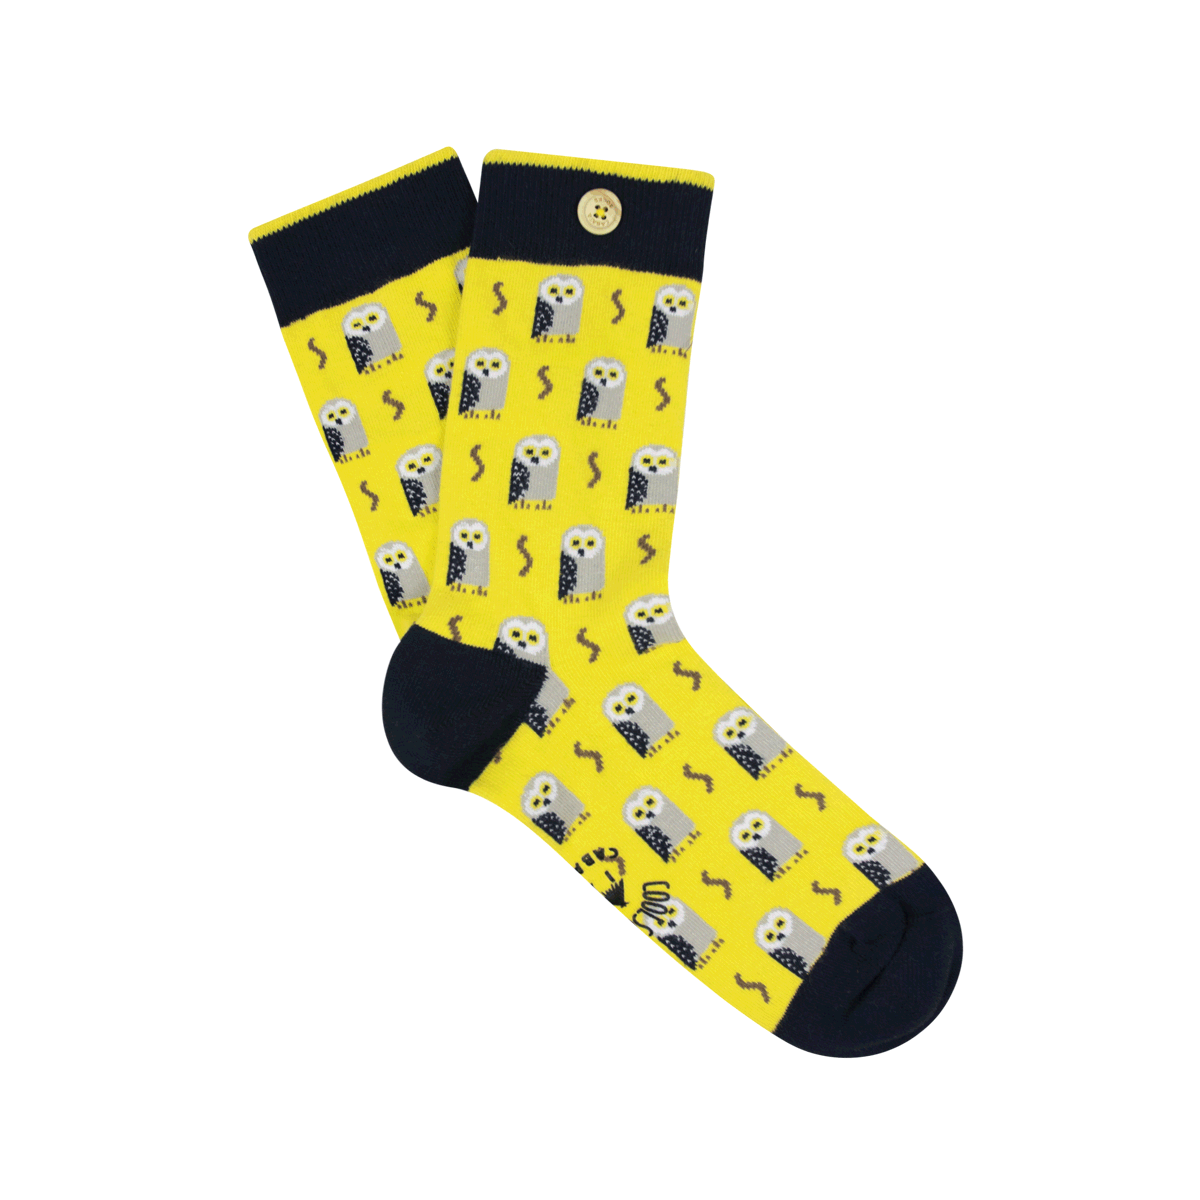 unlosable-socks-wood-button-men-41-46-socks20-evan-sok